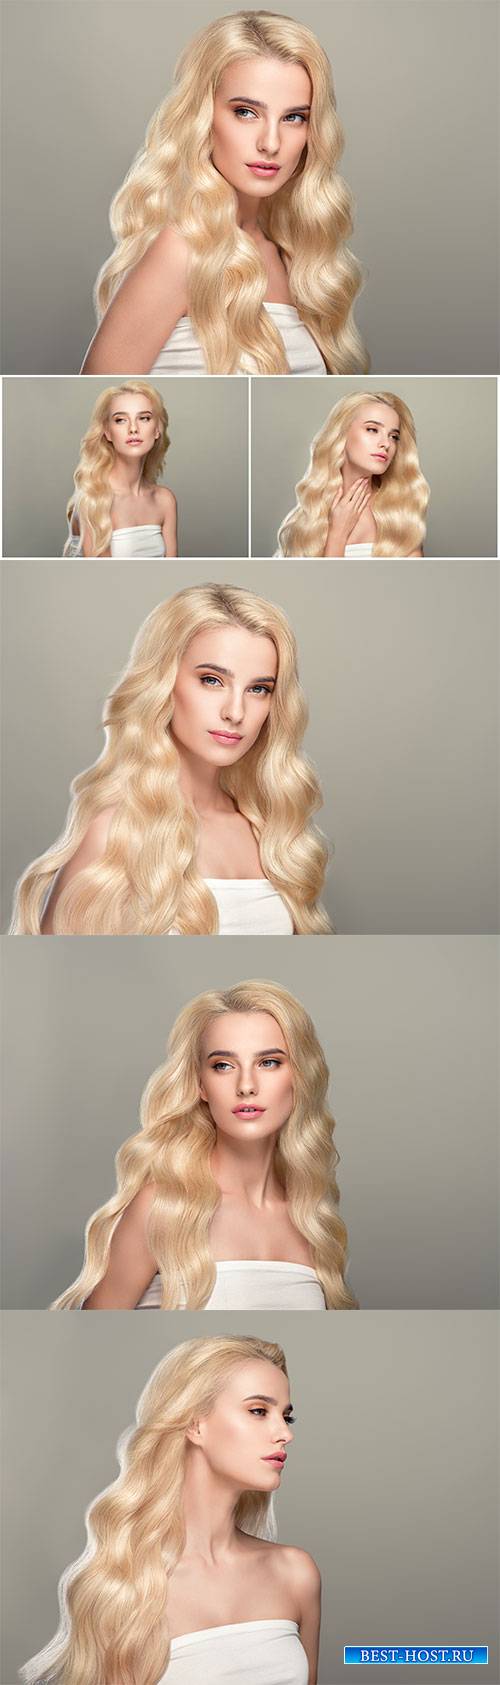 Beautiful girl with wavy white hair